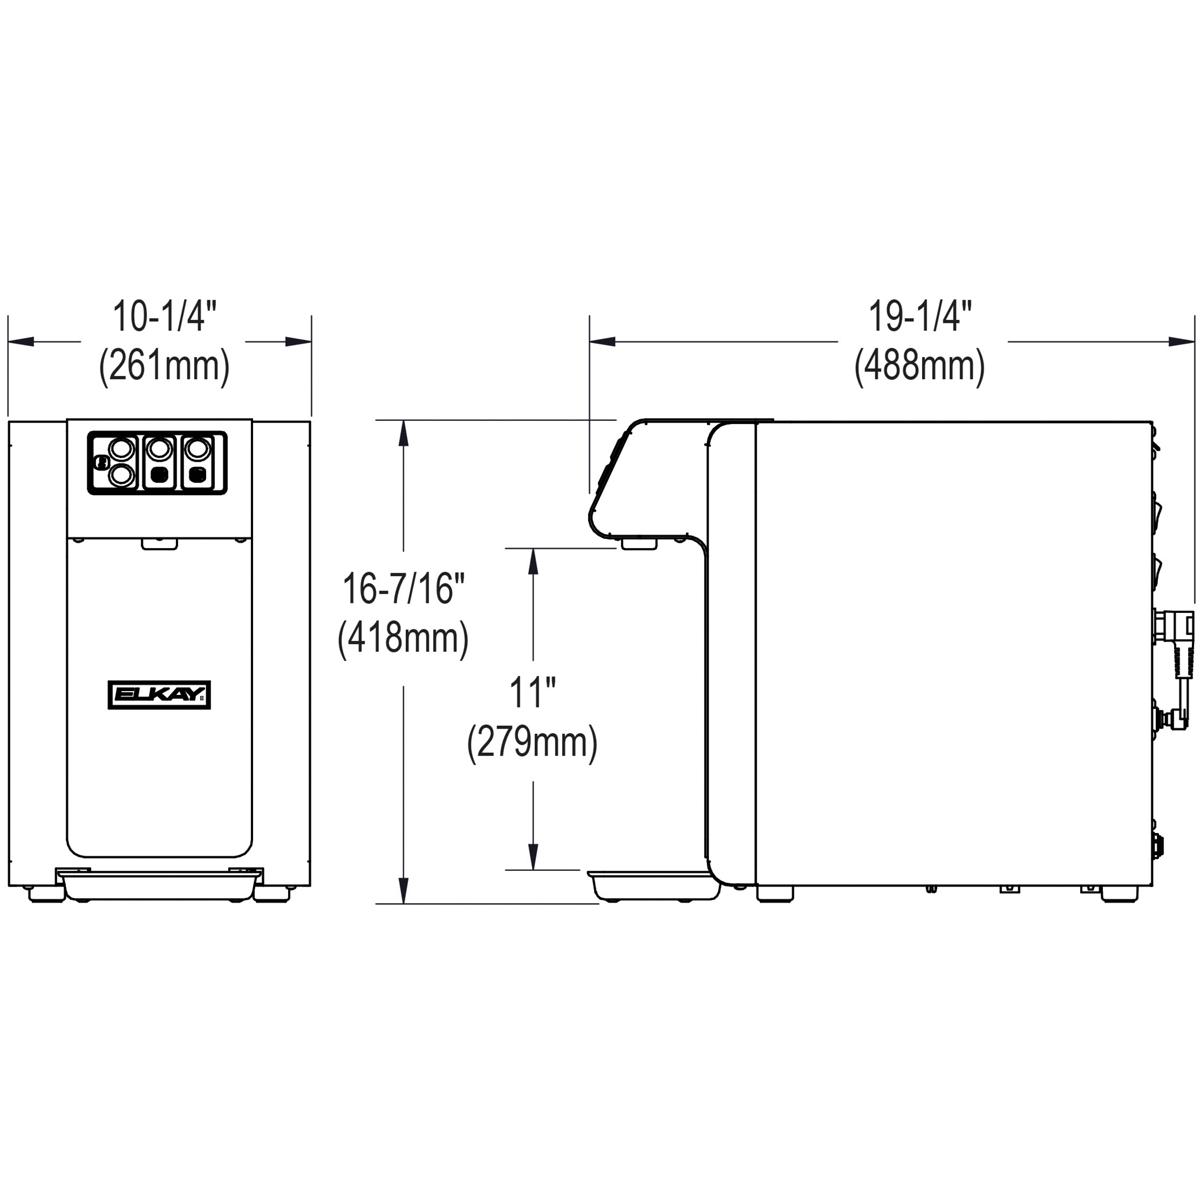 Elkay 1.5 GPH Hot Filtered Stainless Steel Water Dispenser